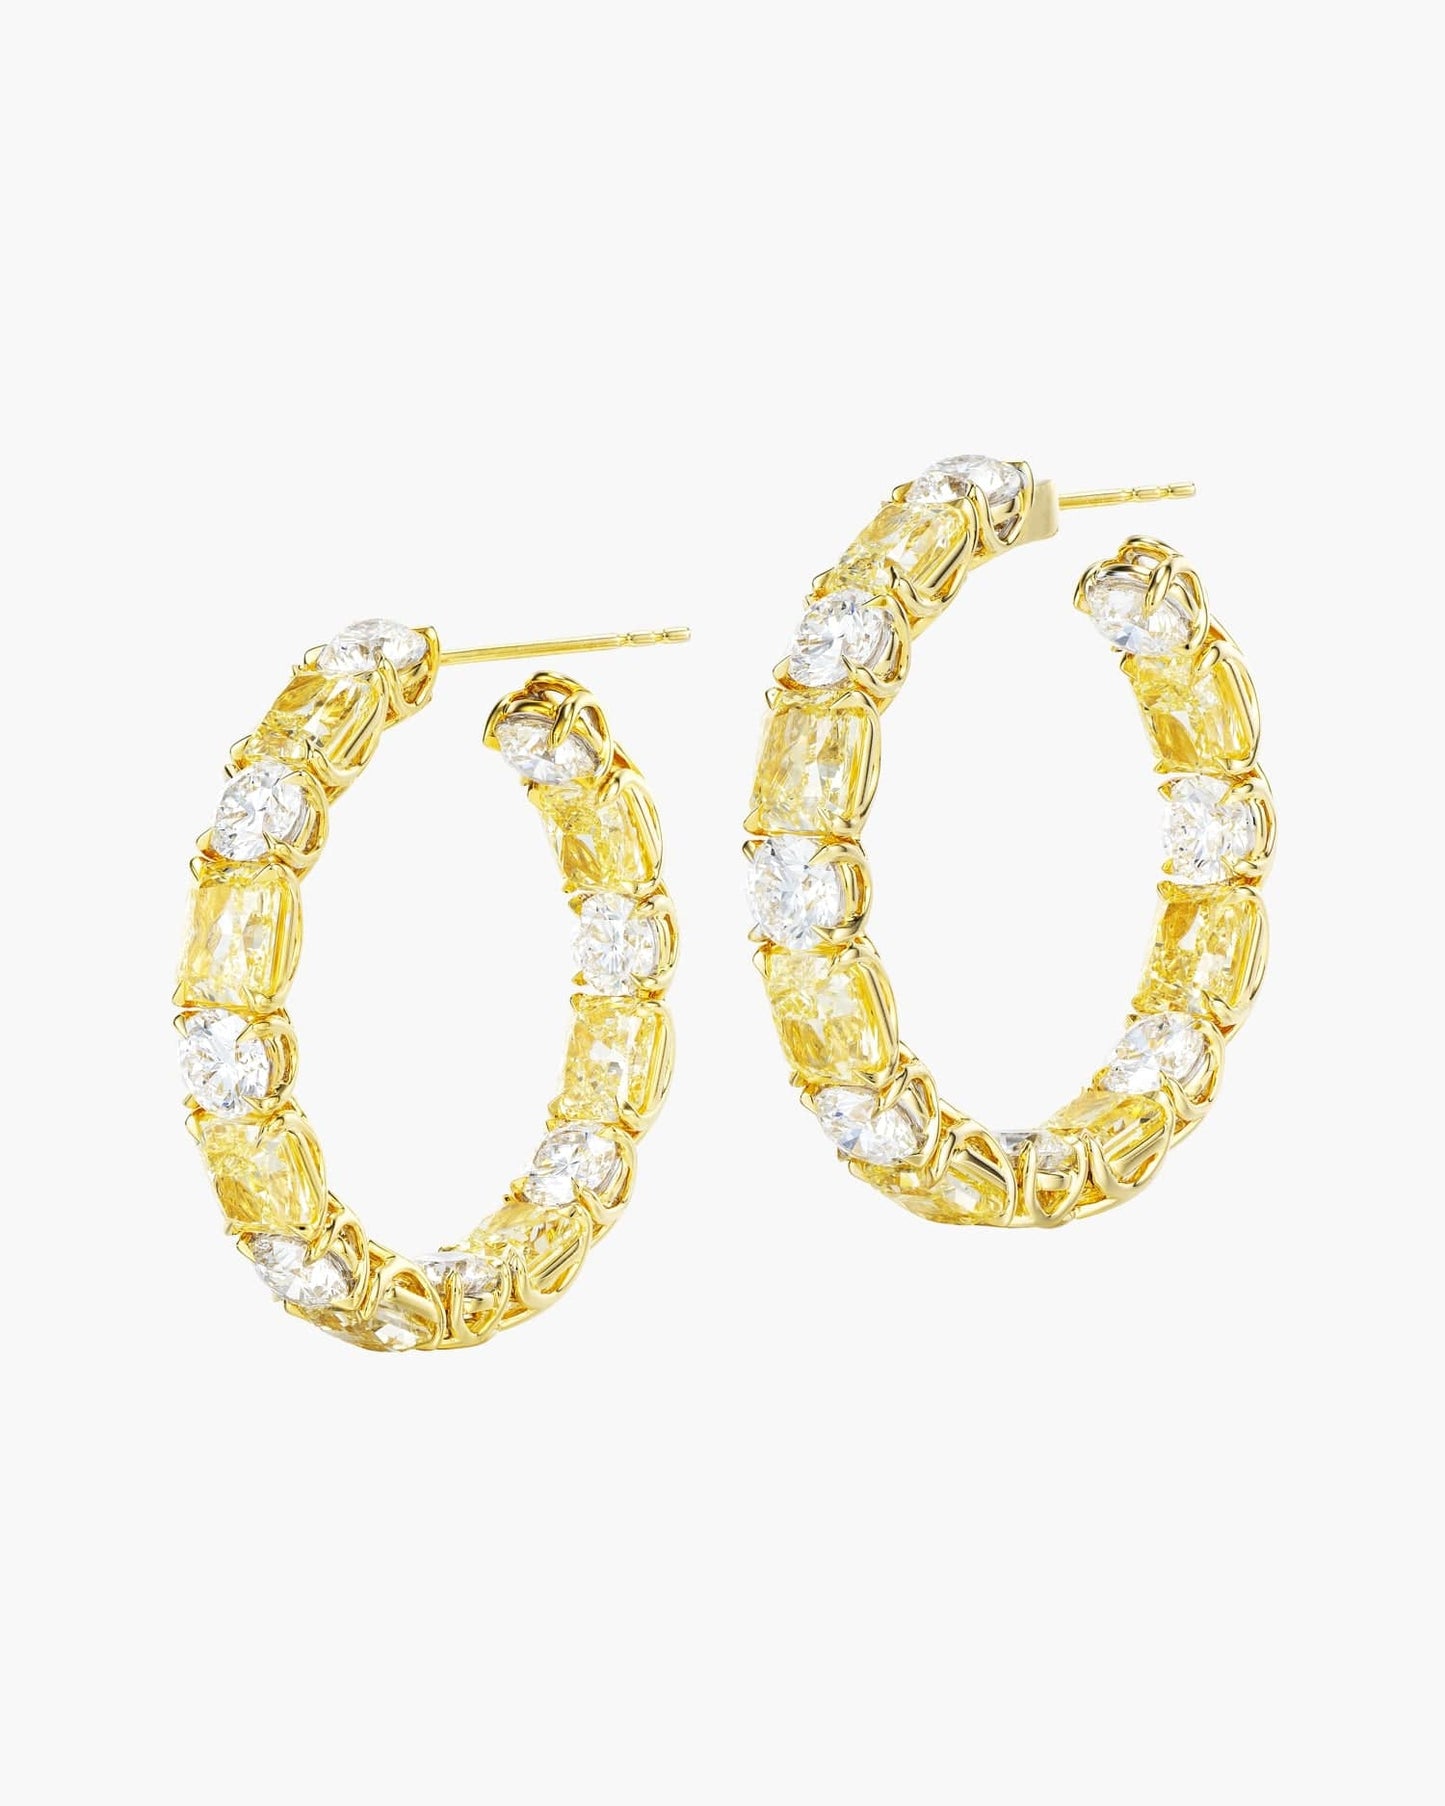 Radiant Cut Yellow and White Diamond Hoop Earrings (1.00 carat)